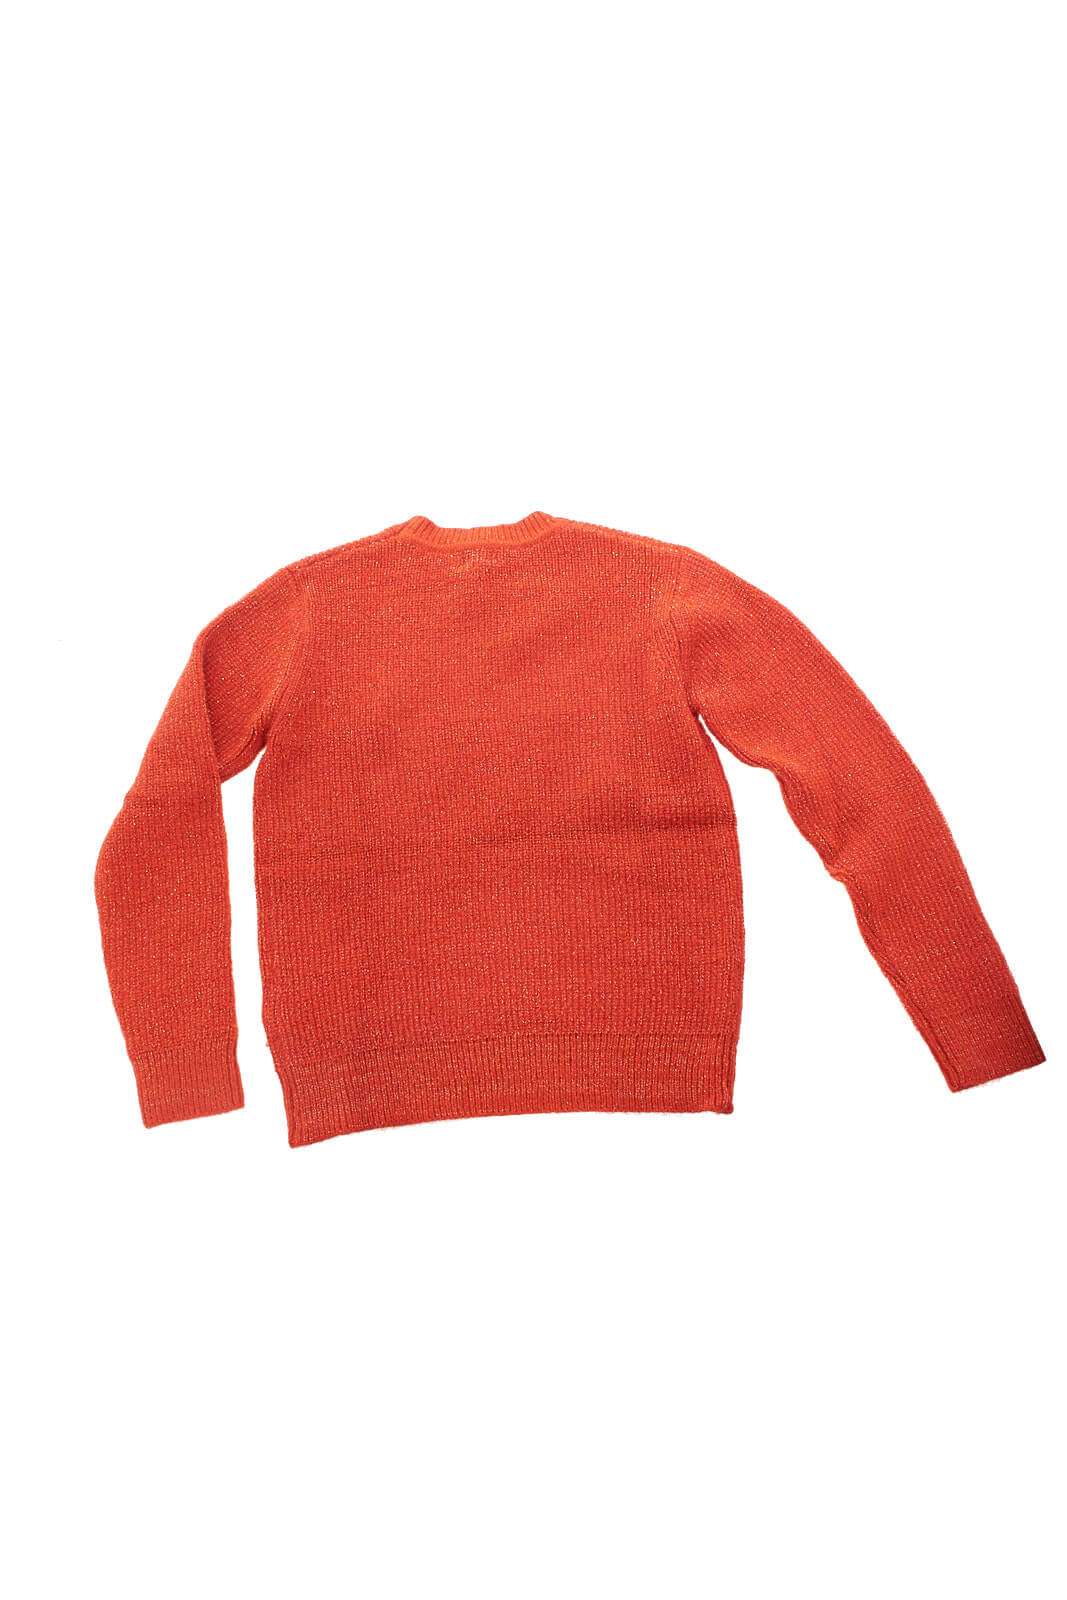 Gaialuna Girl's knitted sweater